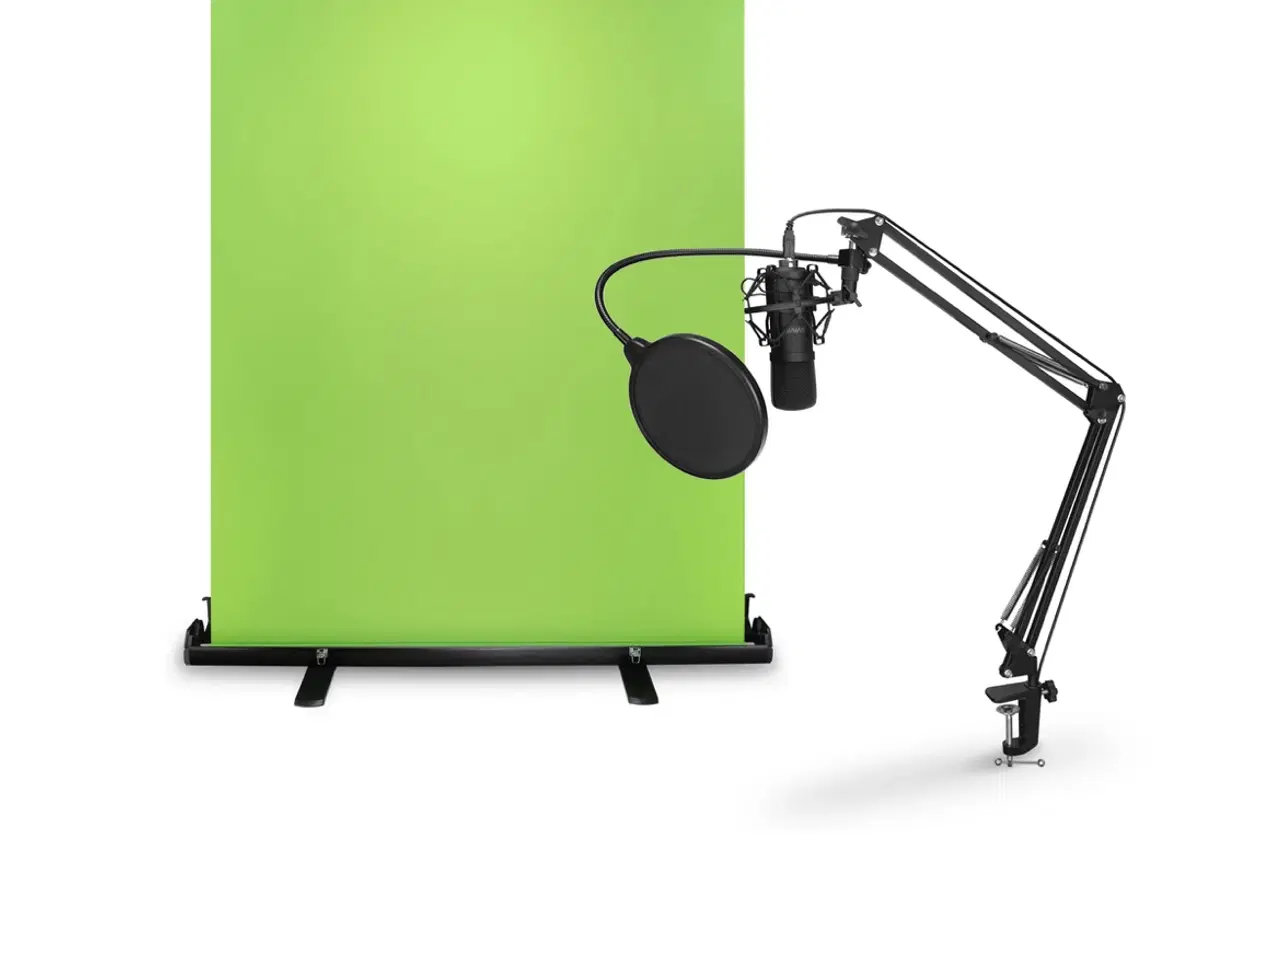 Billede 1 - Green screen og mikrofon